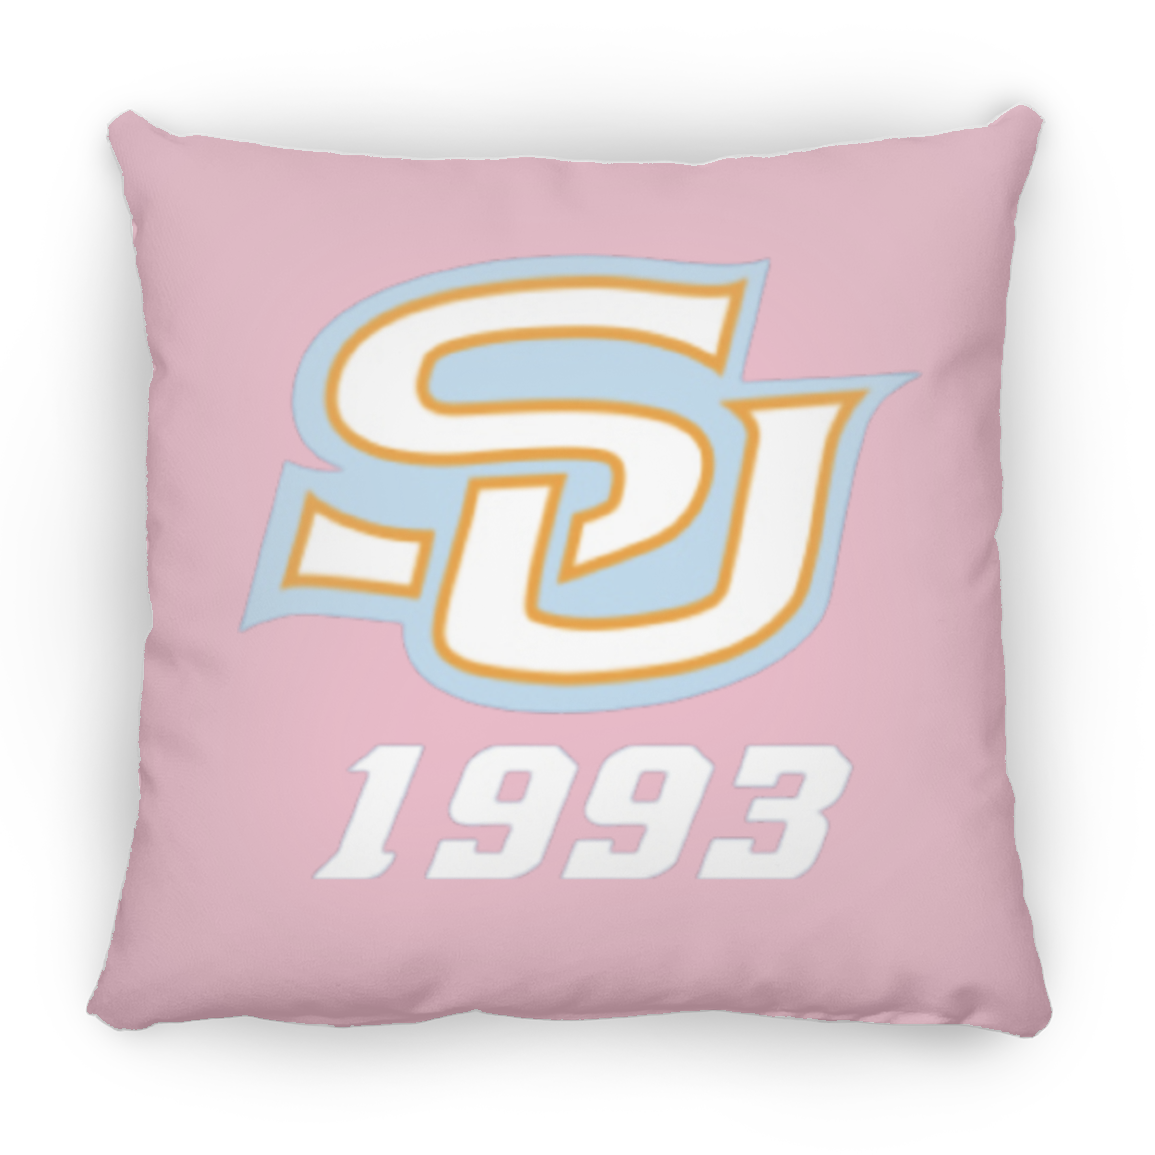 SU 1993 ZP16 Medium Square Pillow